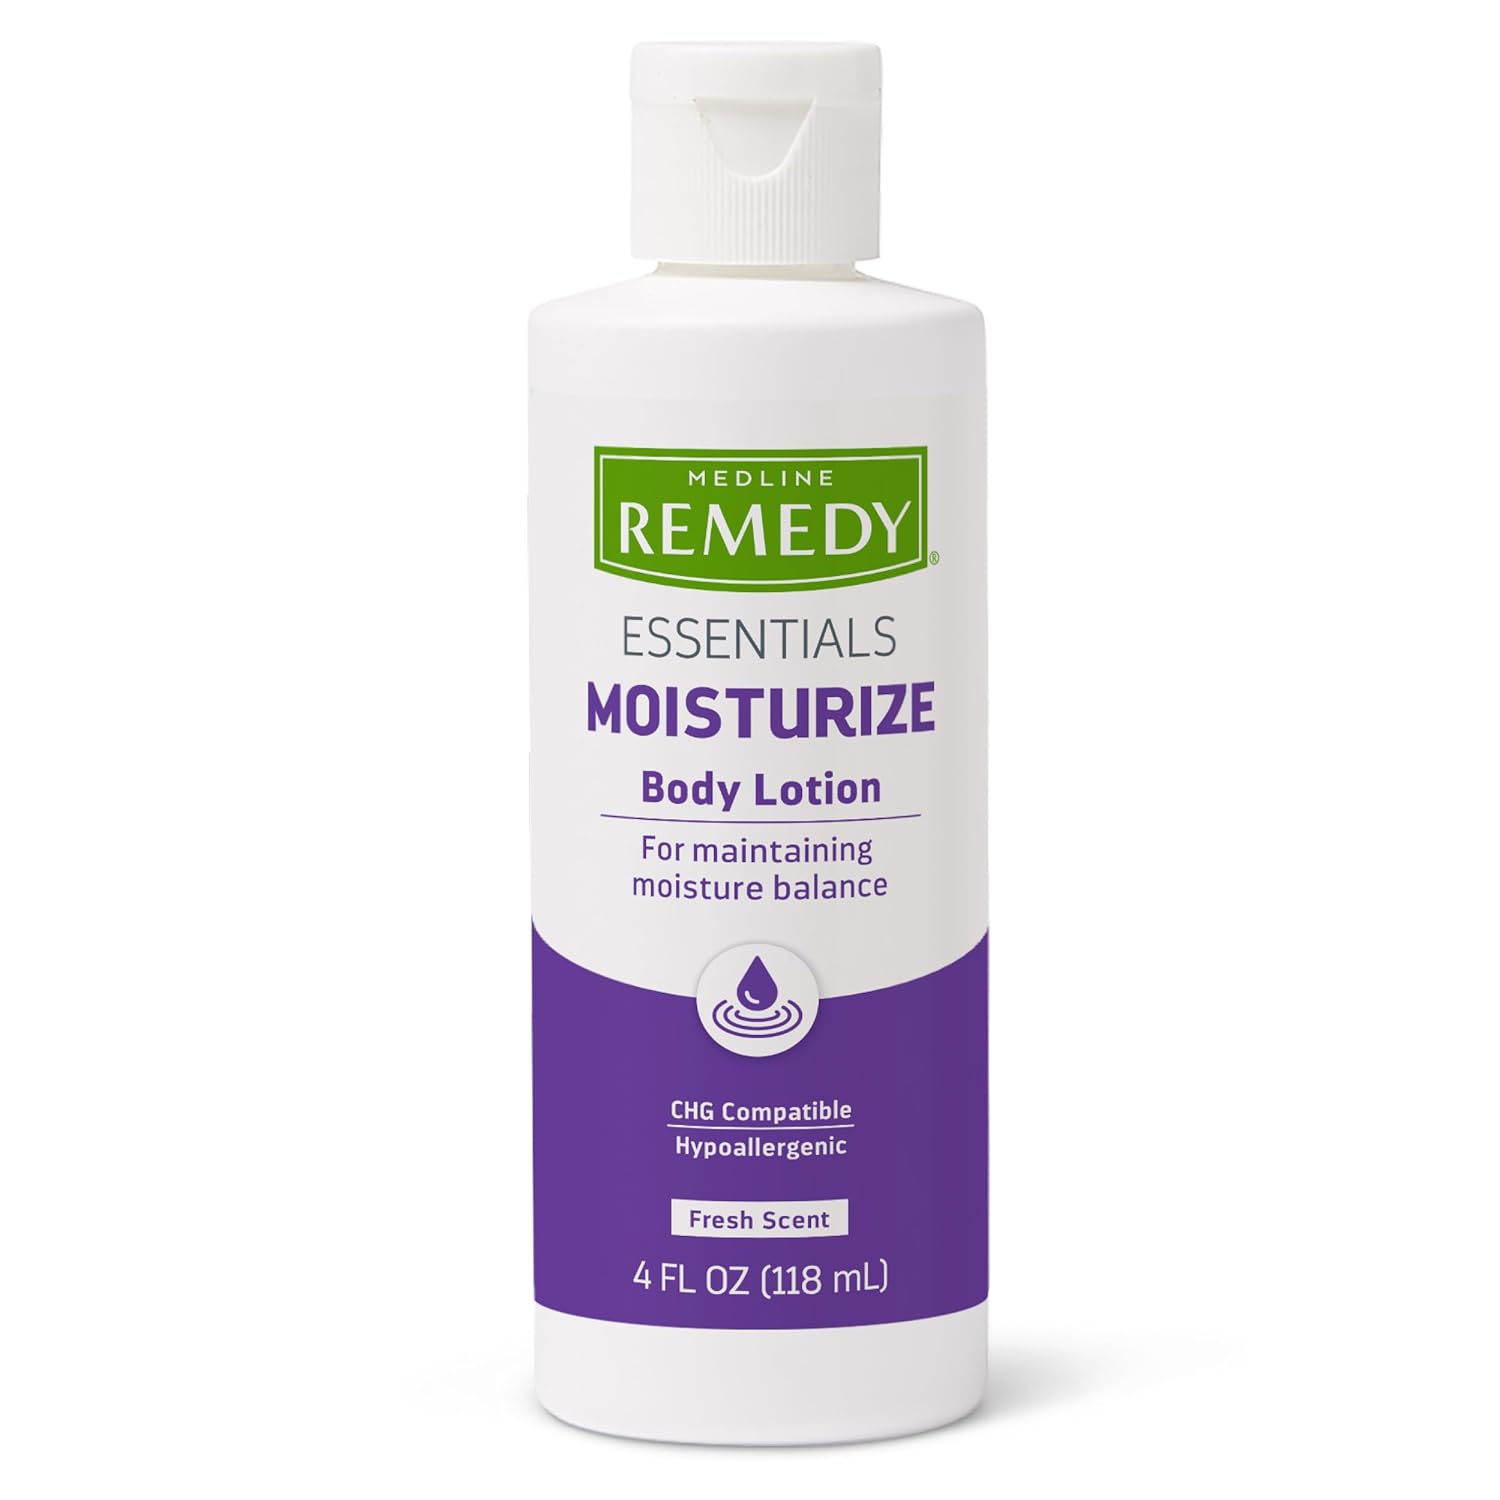 Medline Remedy Essentials Moisturizing Body Lotion (4 oz Bottle), 48 Count, Fresh Scent, Hydrating, Non-Greasy, For Dry Skin, Hypoallergenic, Men, Women, Elderly